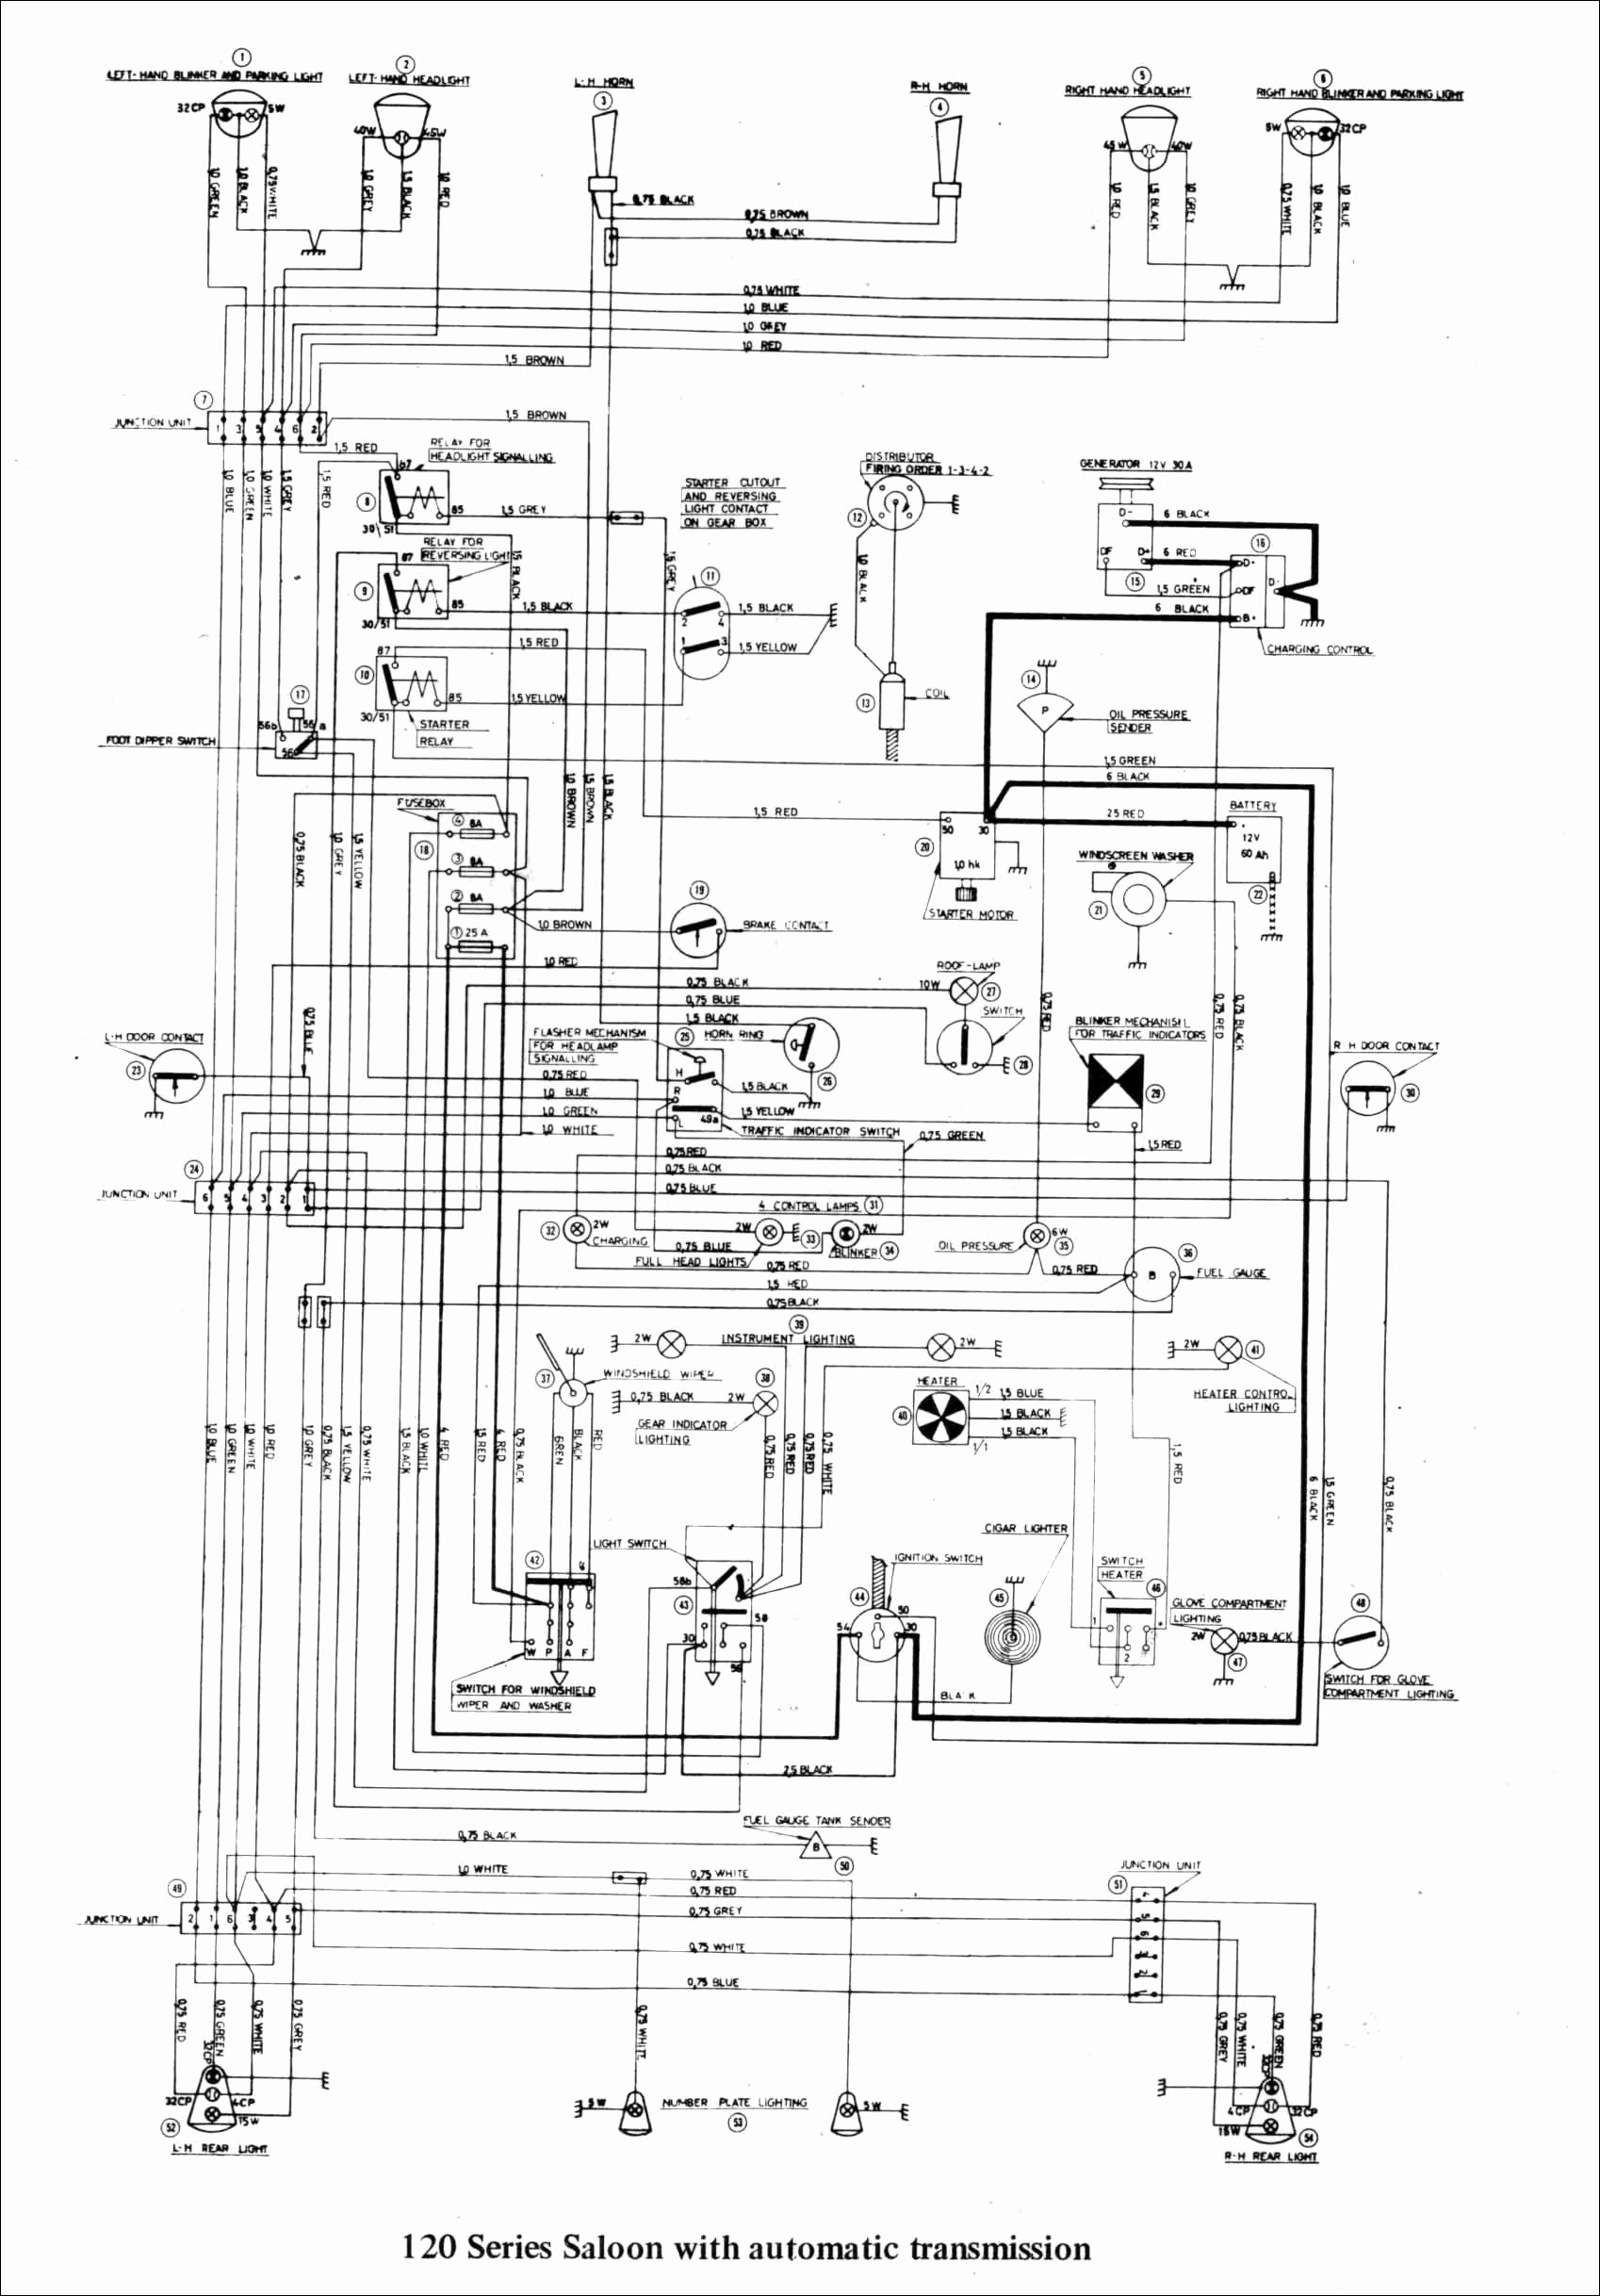 Aftermarket Radio Wiring Diagram Best solenoid Wiring Diagram Unique Sw Em Od Retrofitting A Vintage